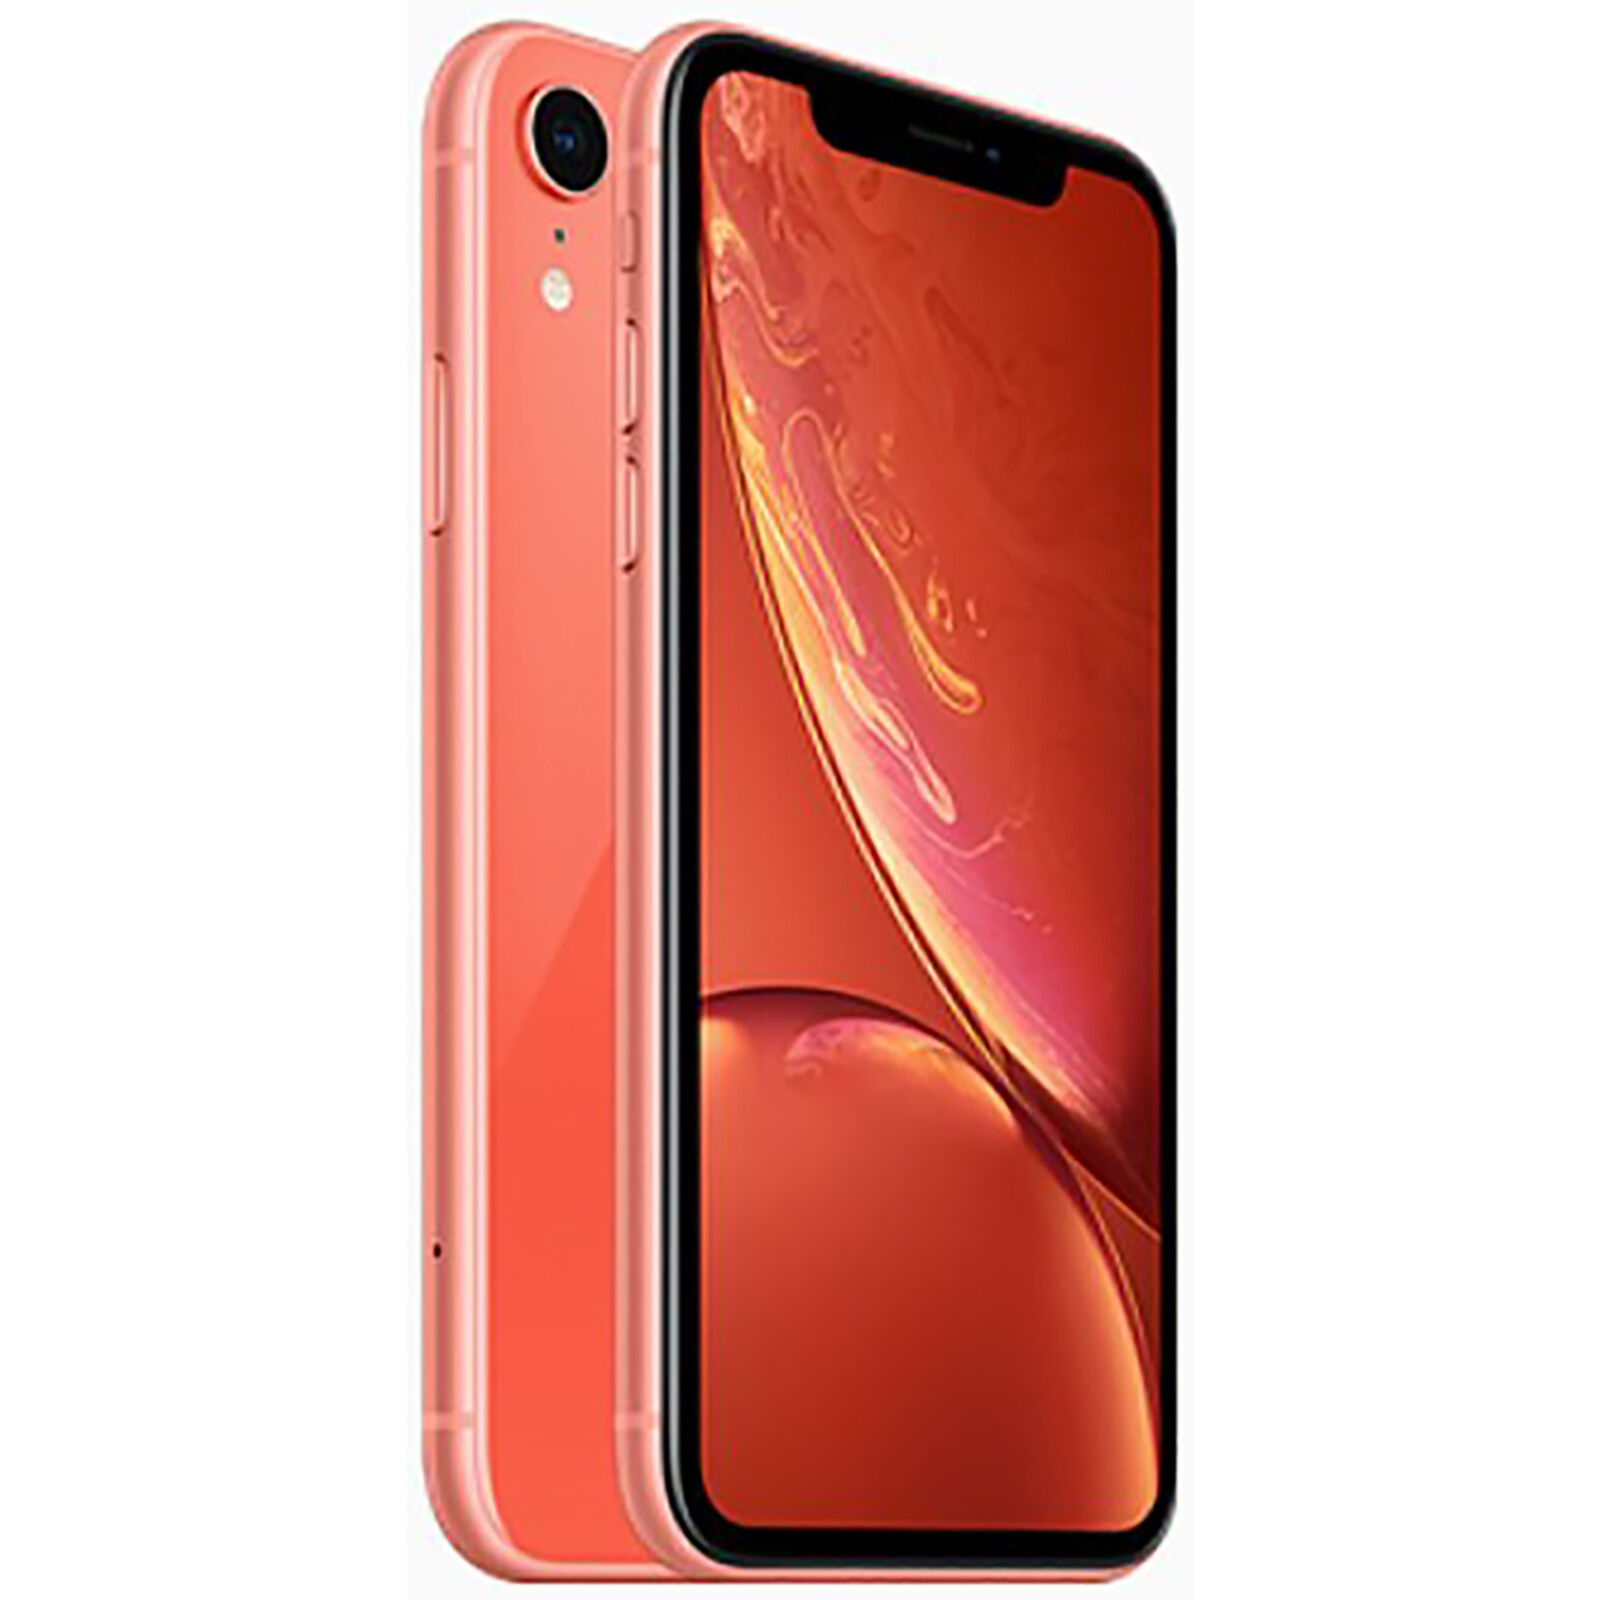 Apple iPhone XR - 64GB - Coral (Verizon) A1984 (CDMA + GSM) for 